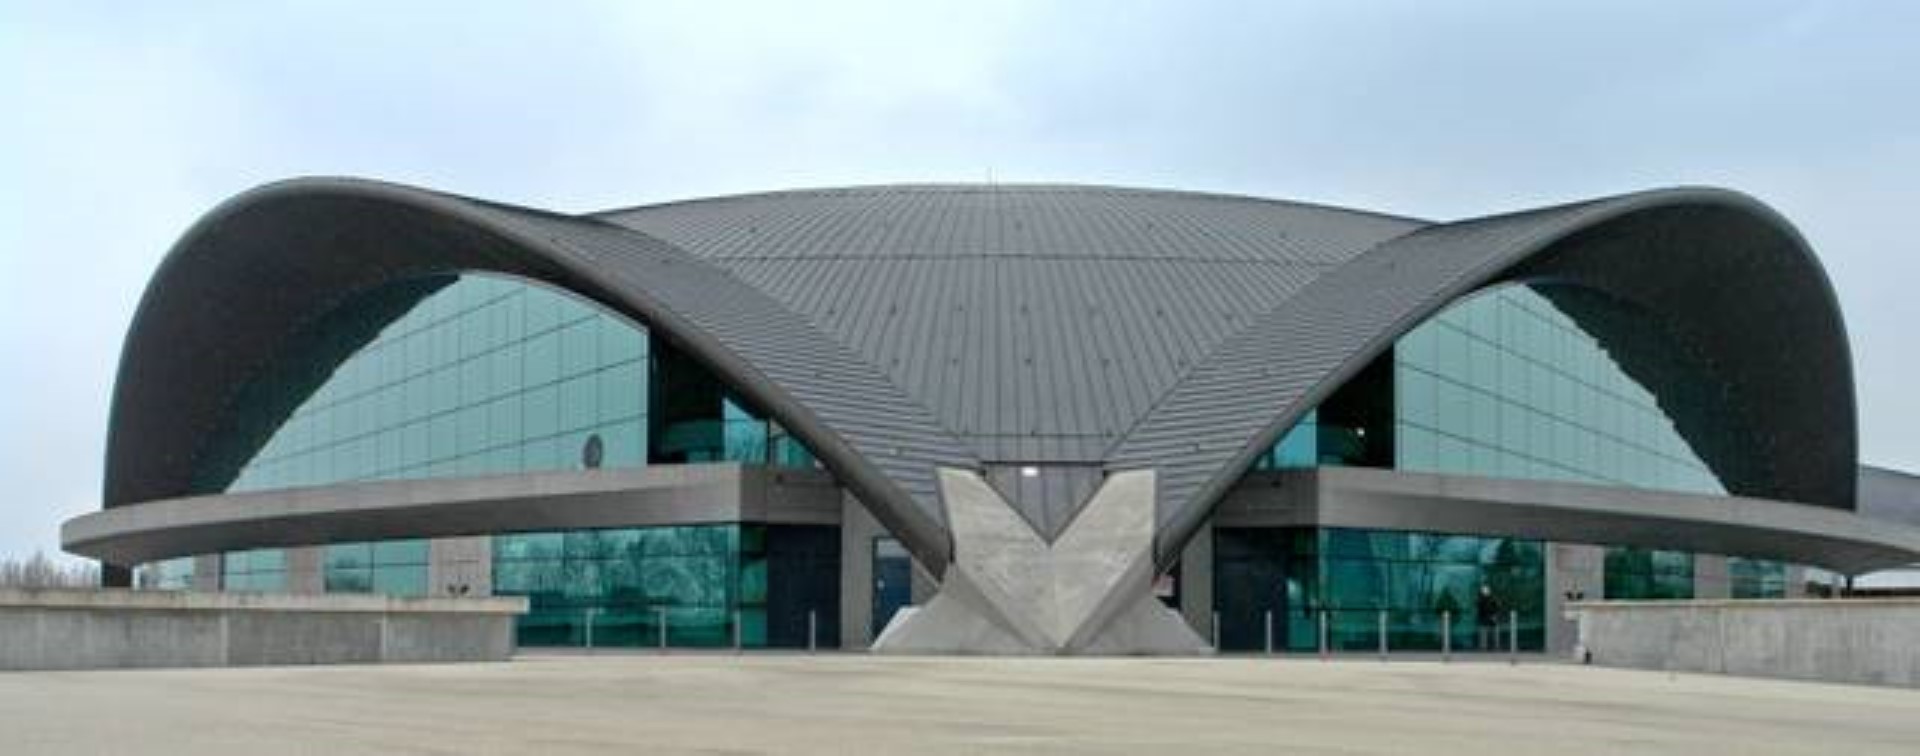 Centre National Sportif et Culturel “D’Coque”, Kirchberg, Luxembourg